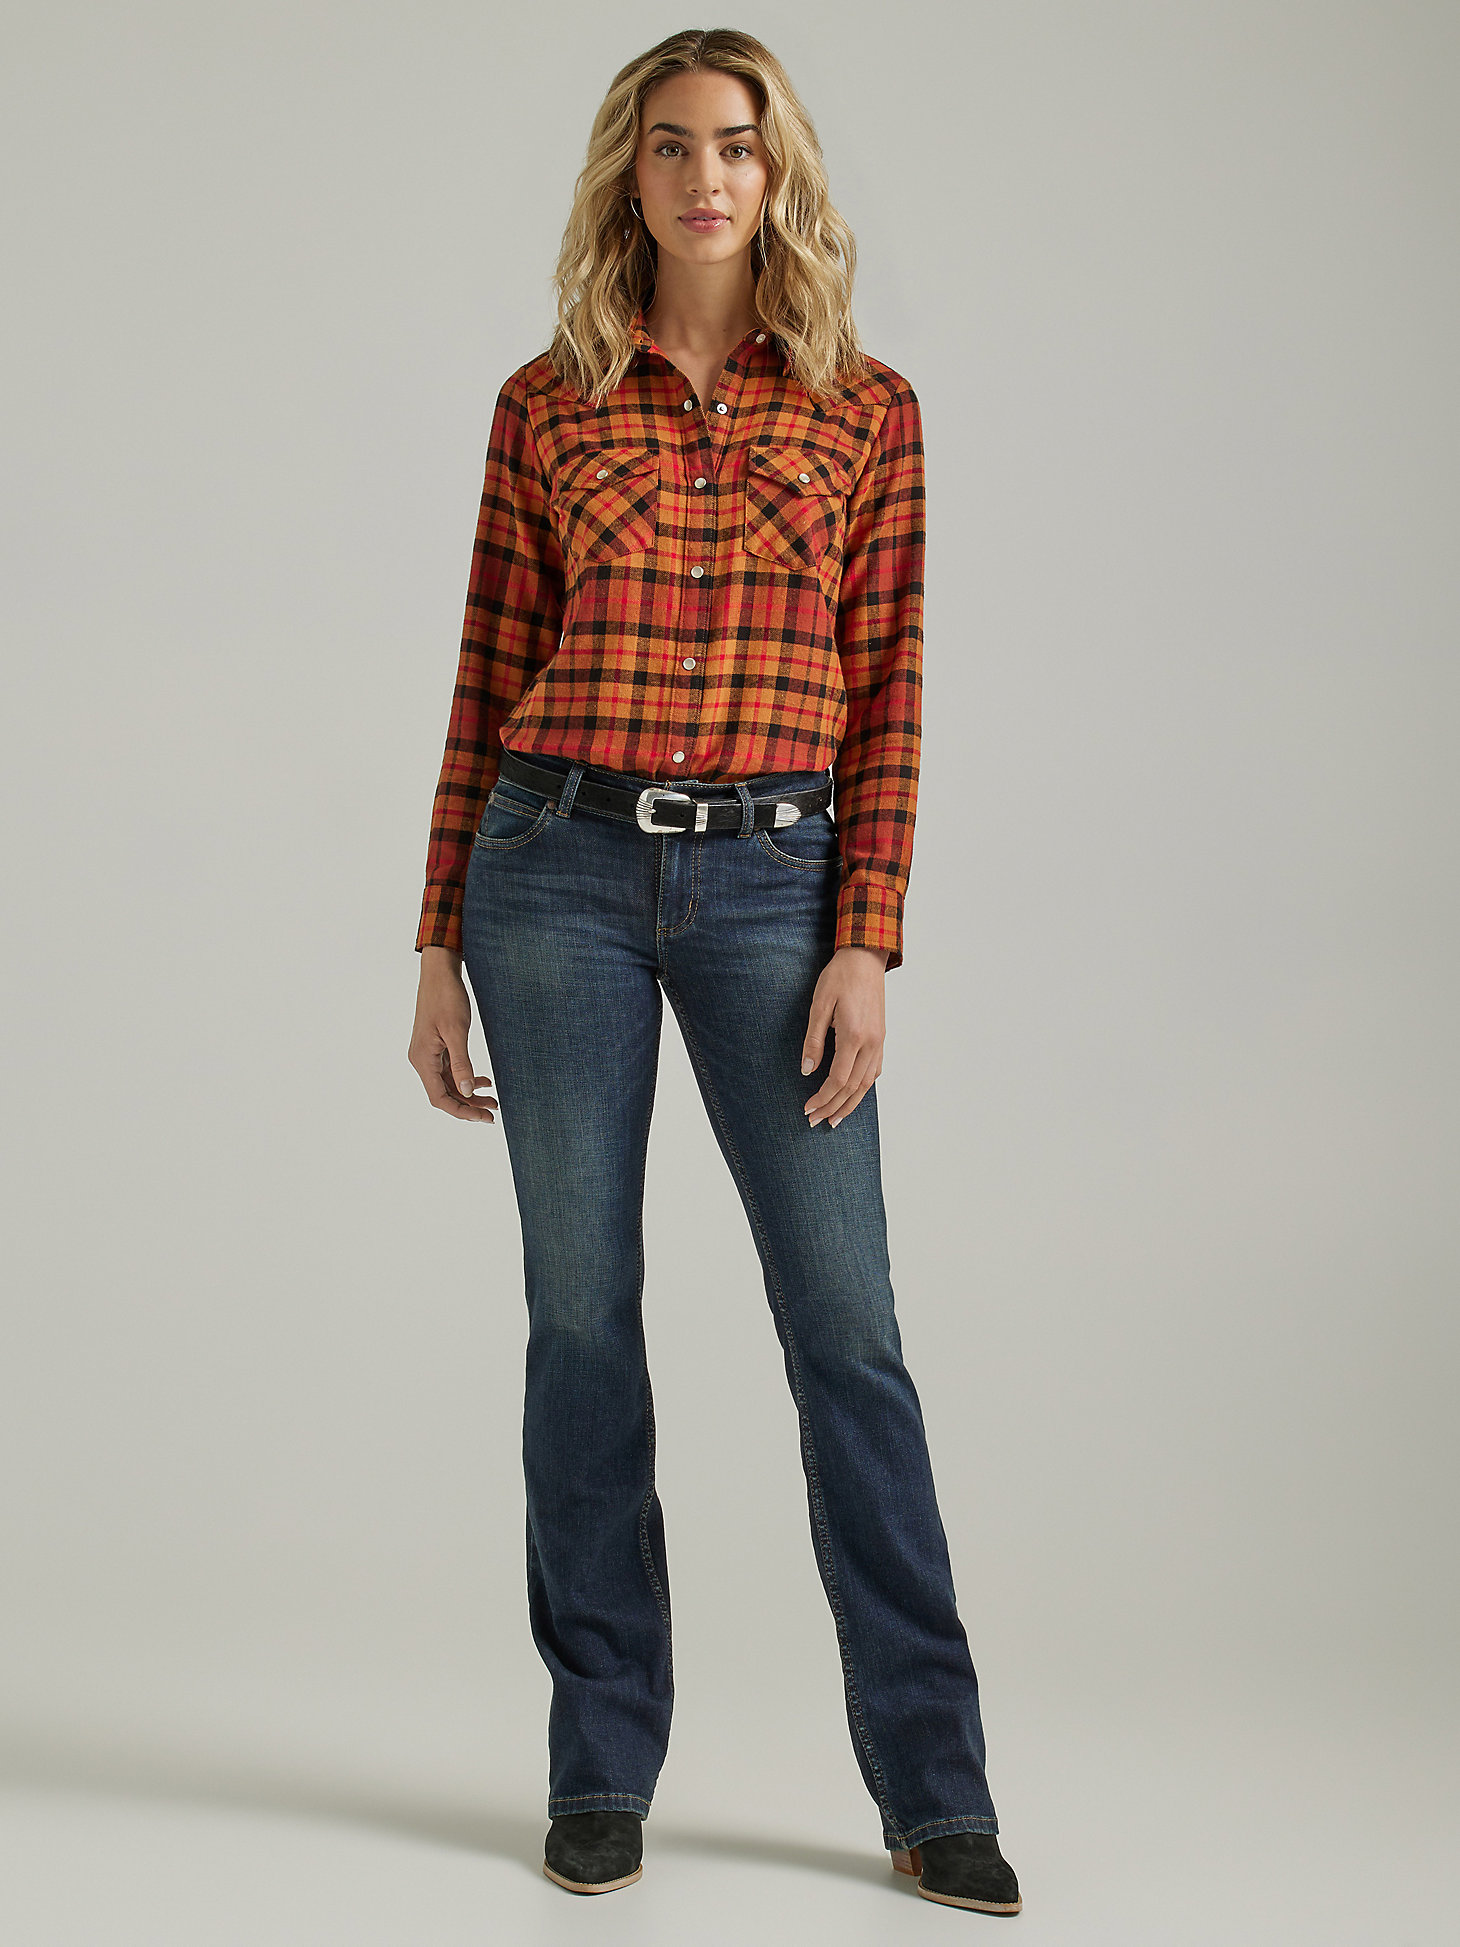 Women's Essential Long Sleeve Flannel Plaid Western Snap Shirt in Adobe alternative view 1